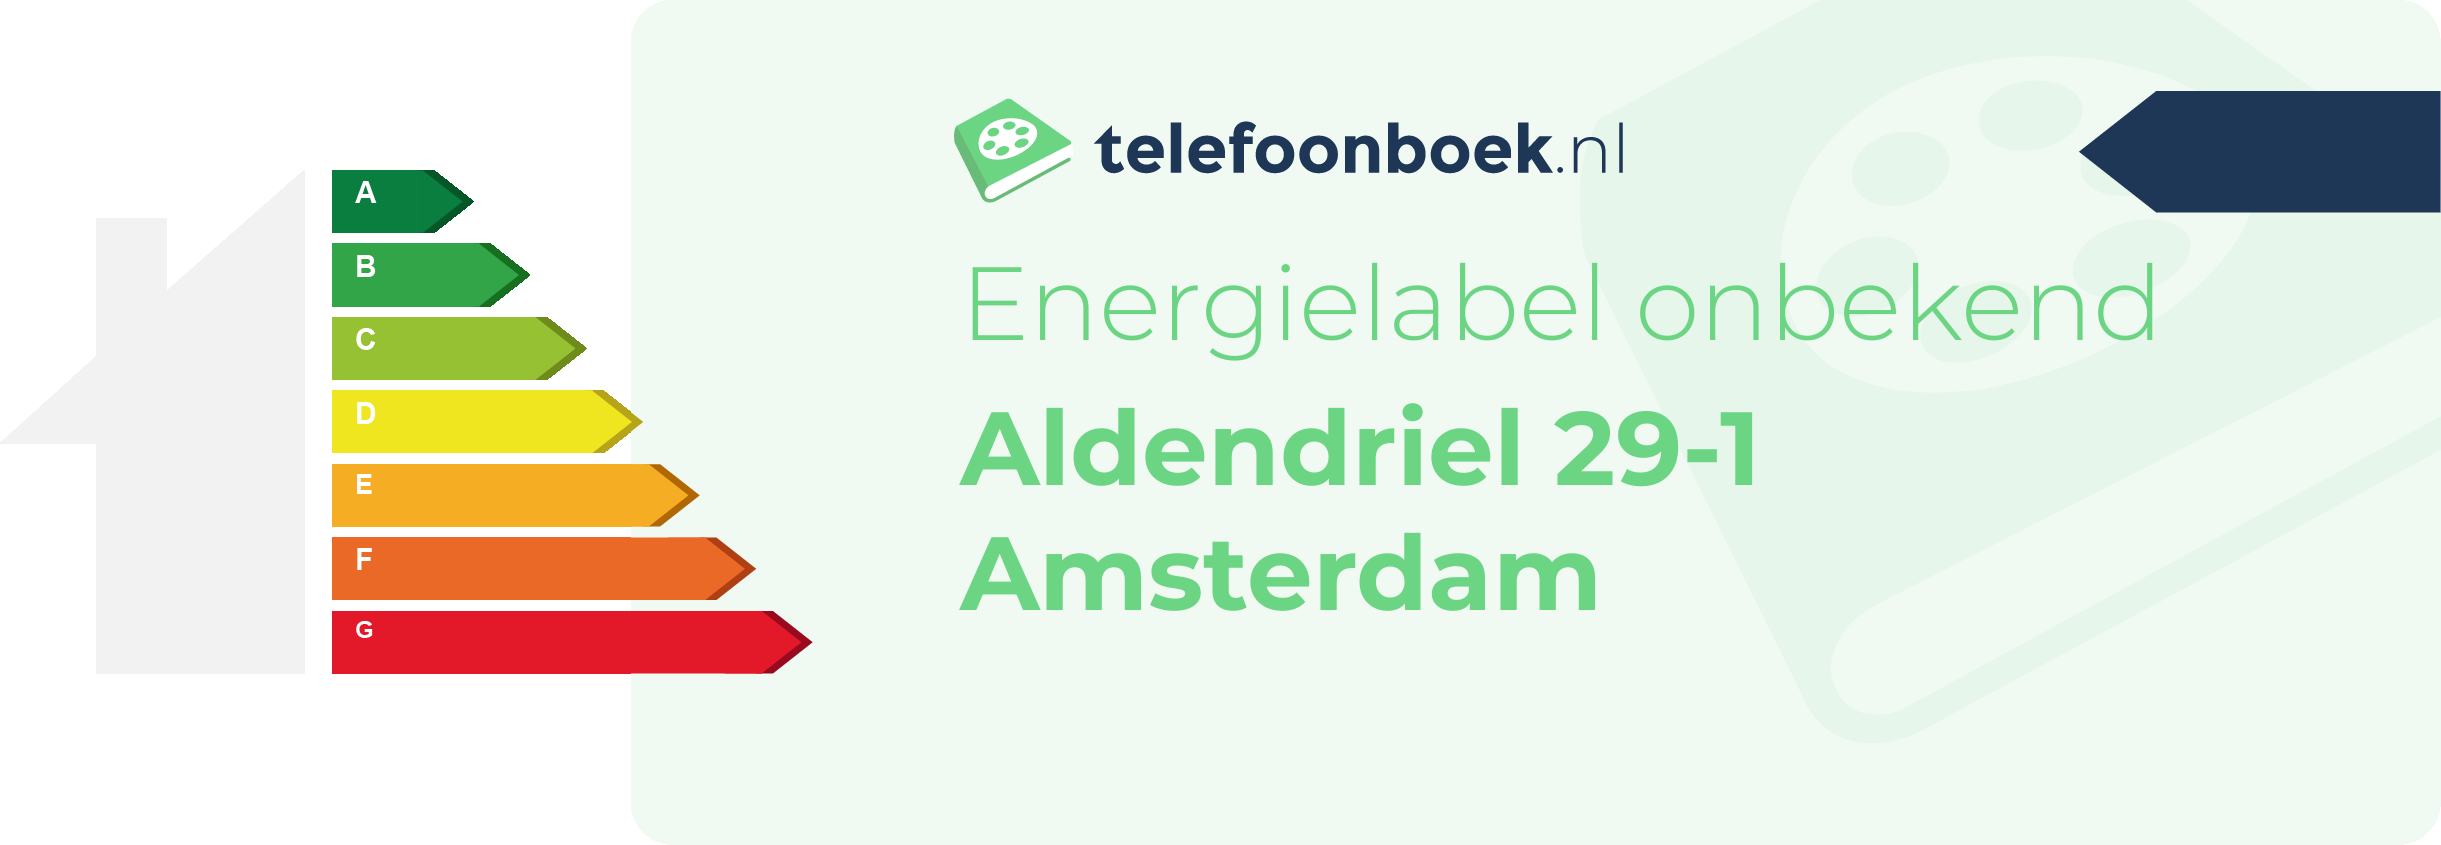 Energielabel Aldendriel 29-1 Amsterdam